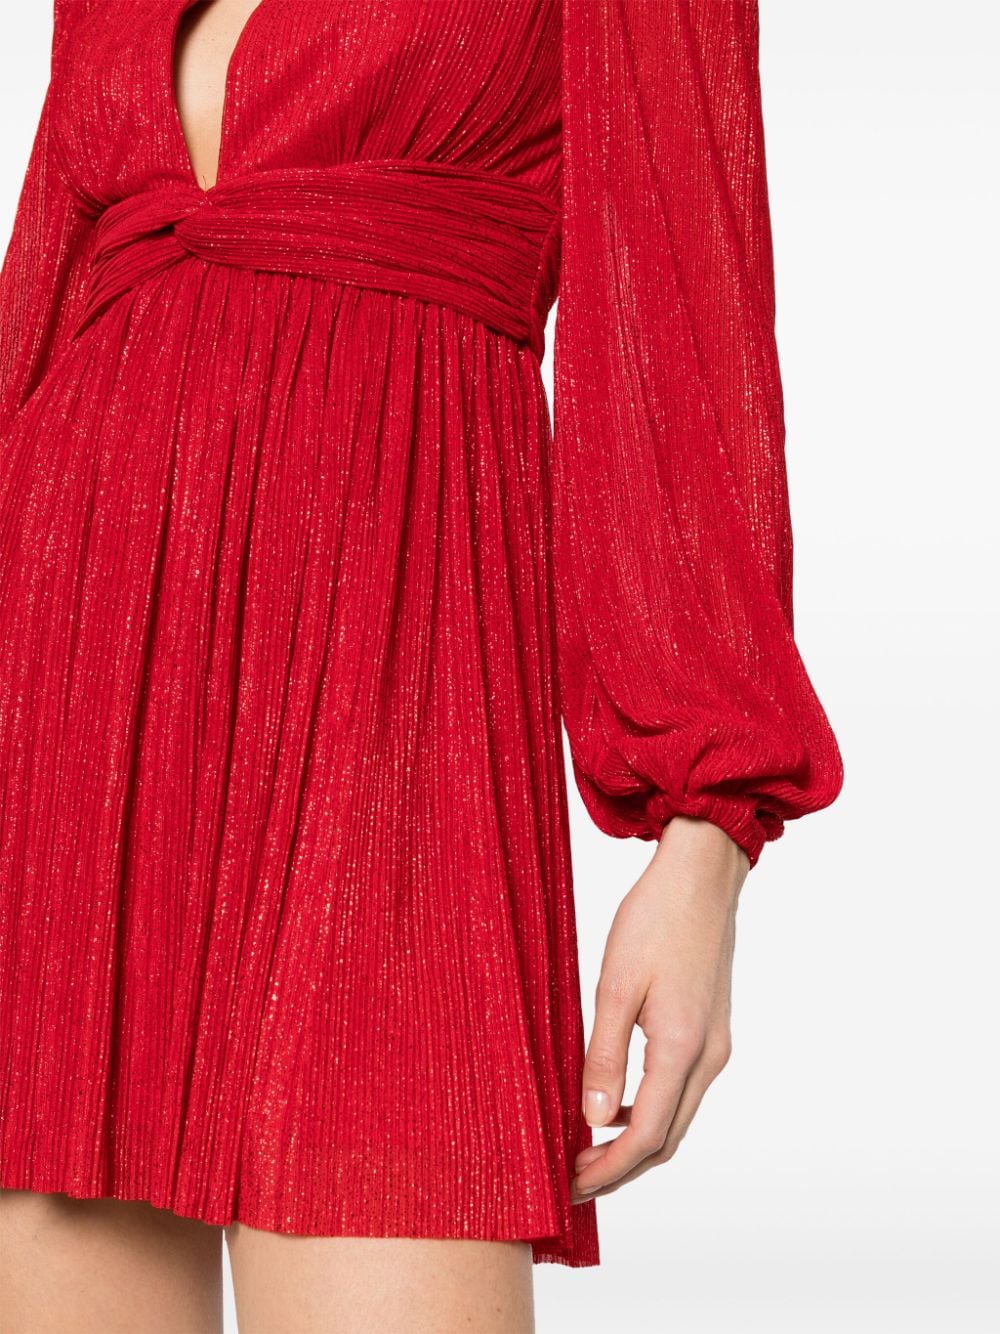 SAMANTHA KEYHOLE MINI dress, red